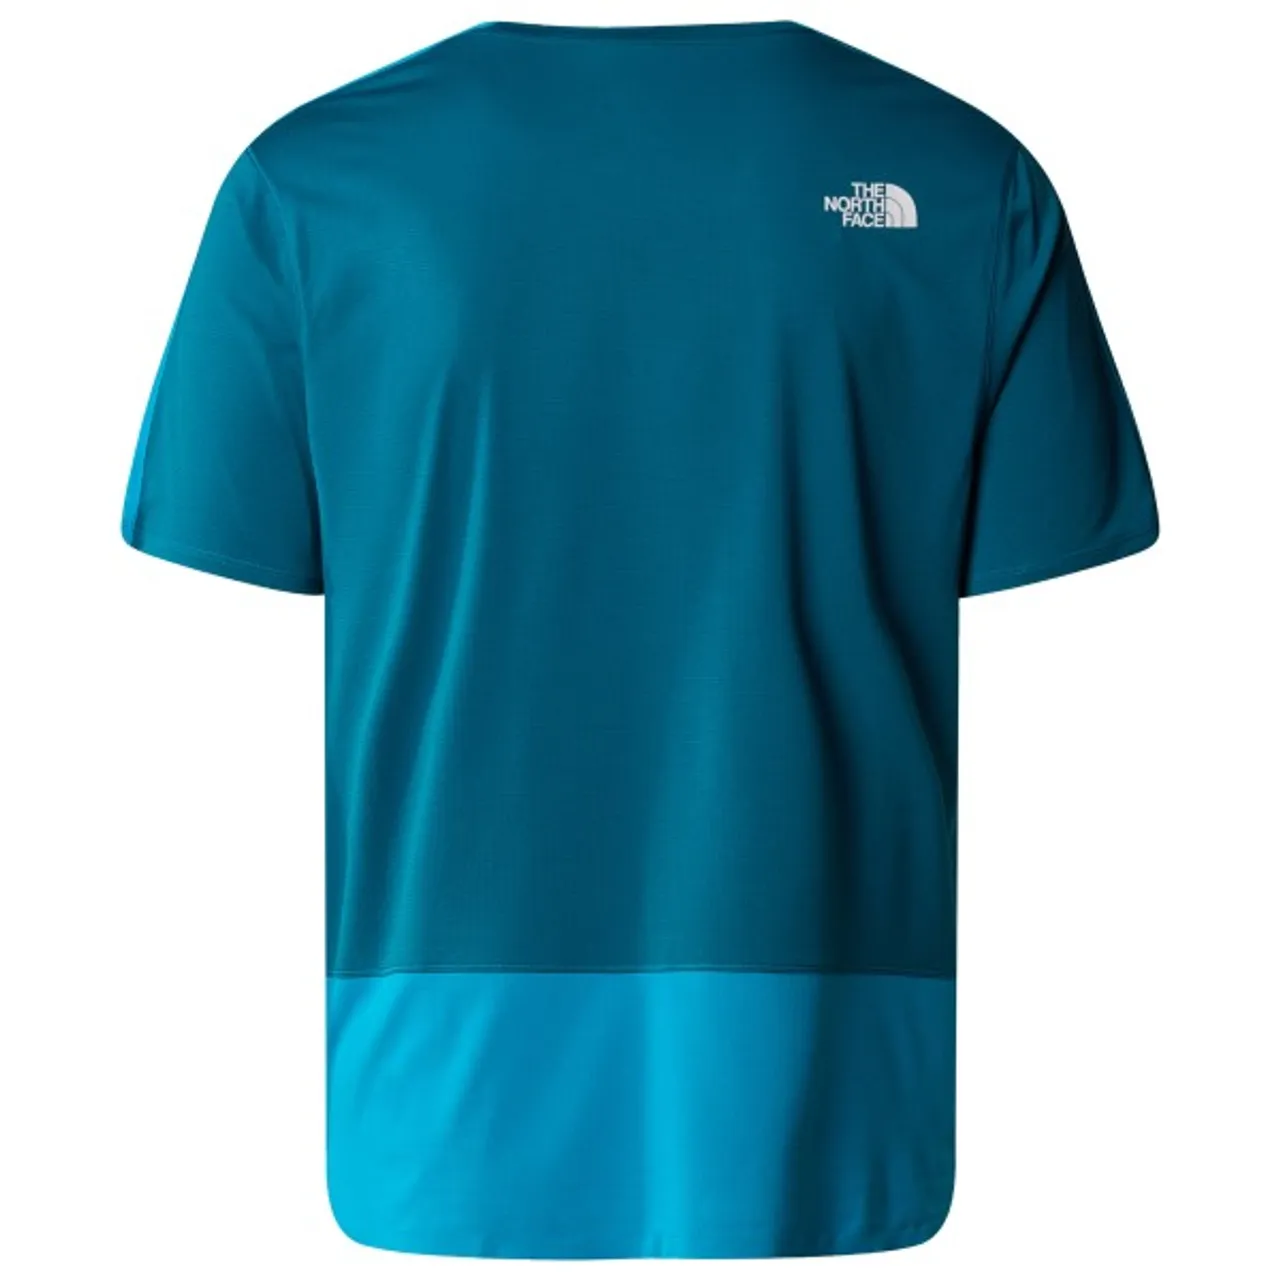 The North Face - Summit High Trail Run S/S - Running shirt